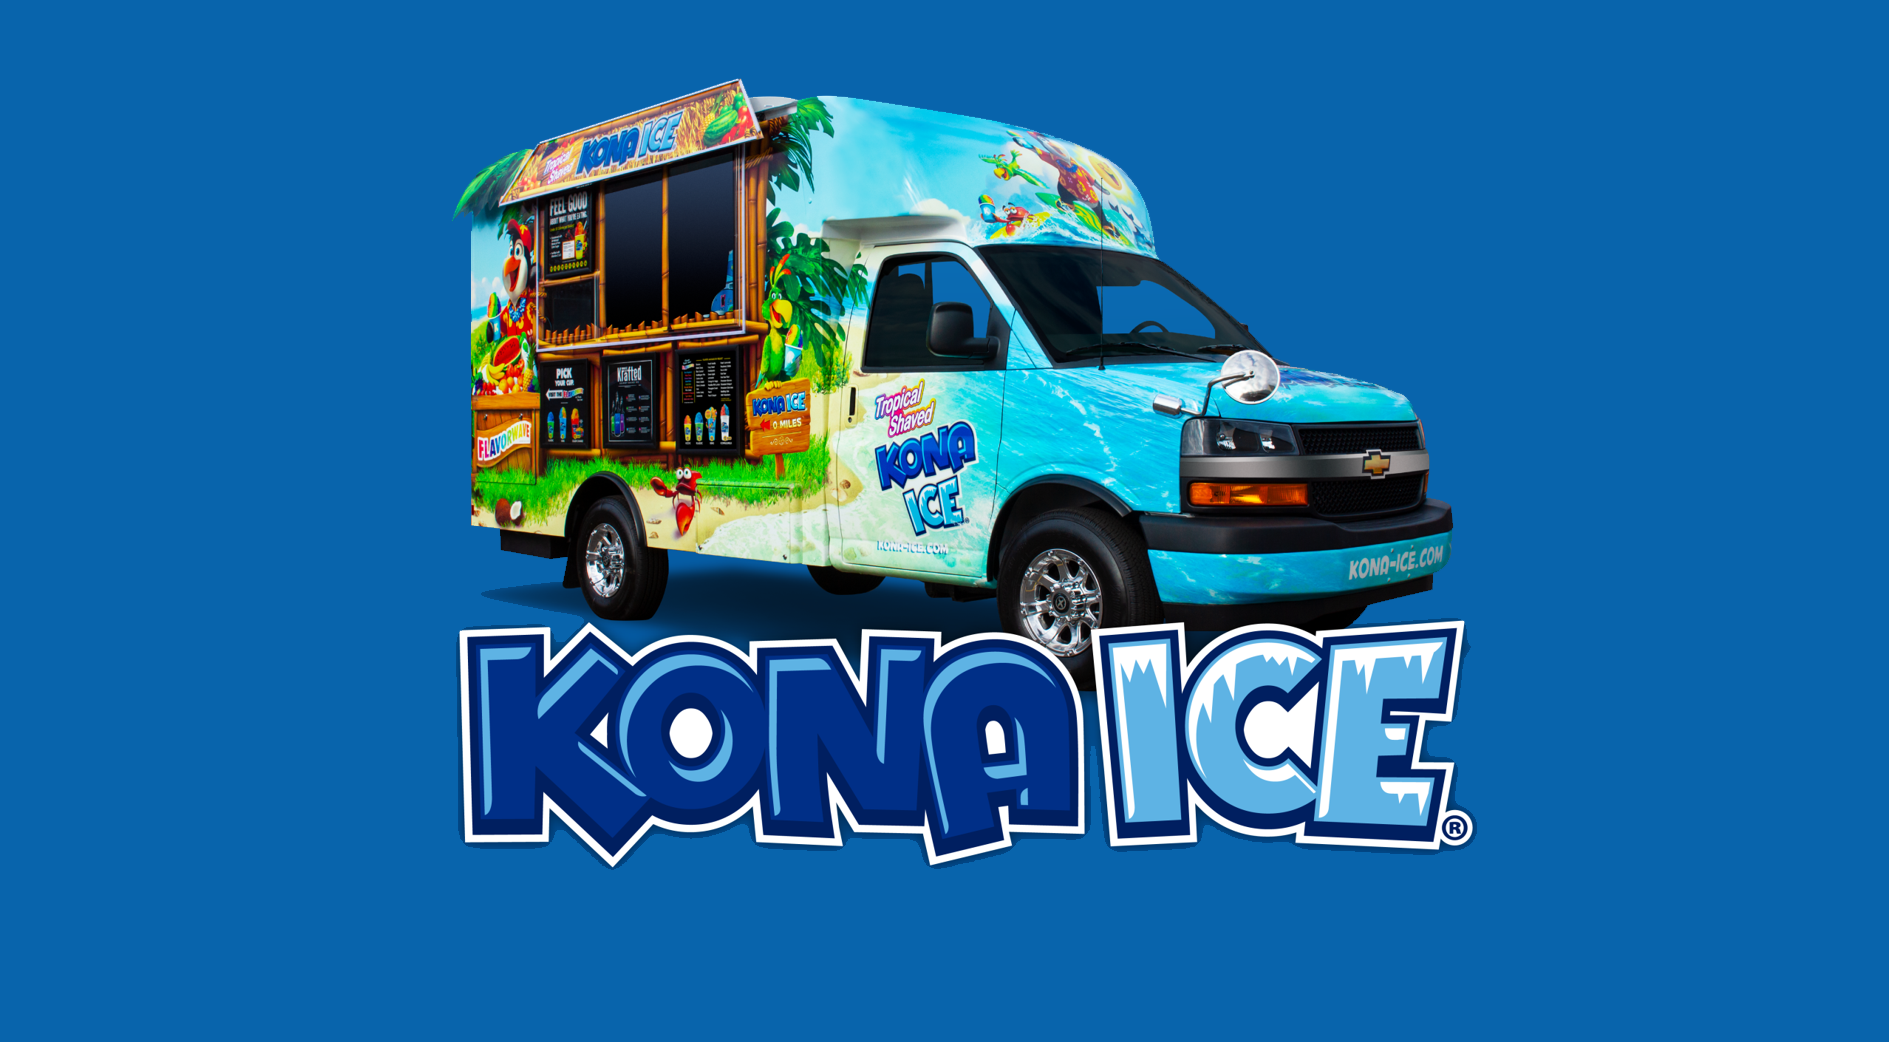 Kona Ice Truck on blue background